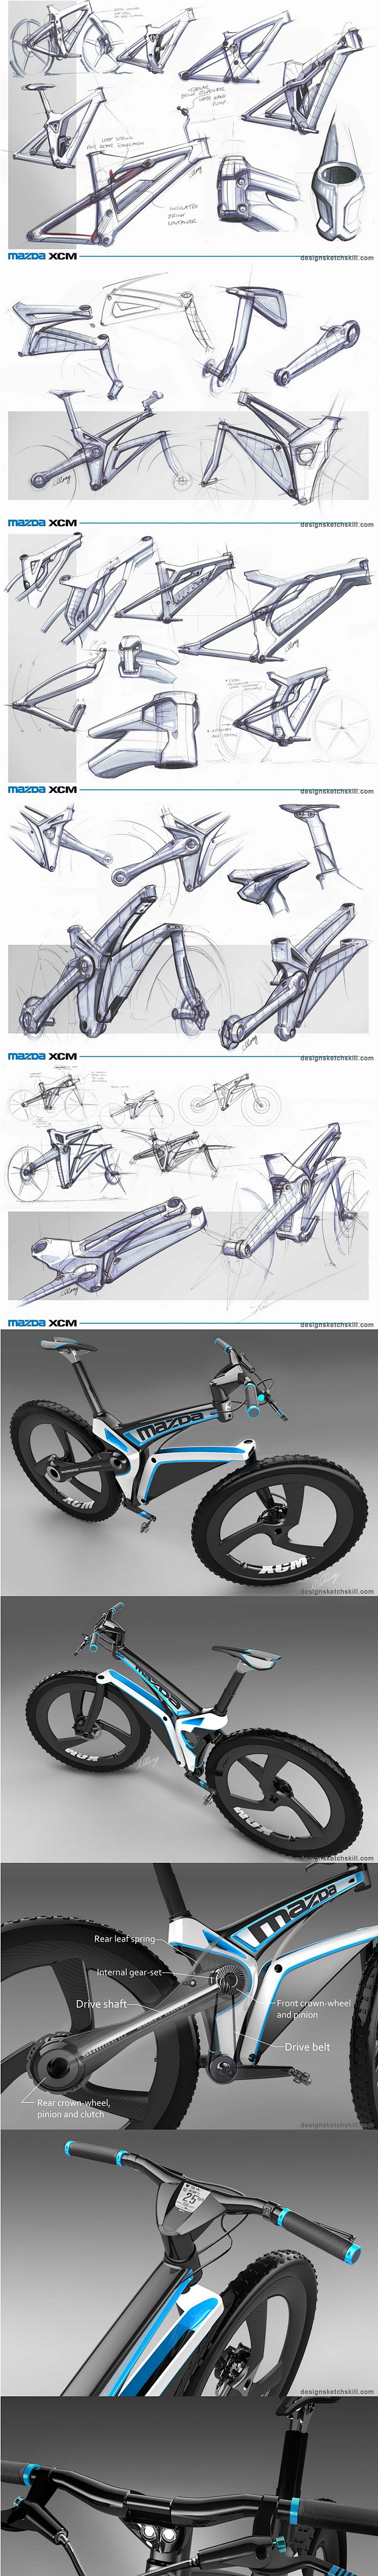 MAZDA XCM 越野自行车设计方案 ...